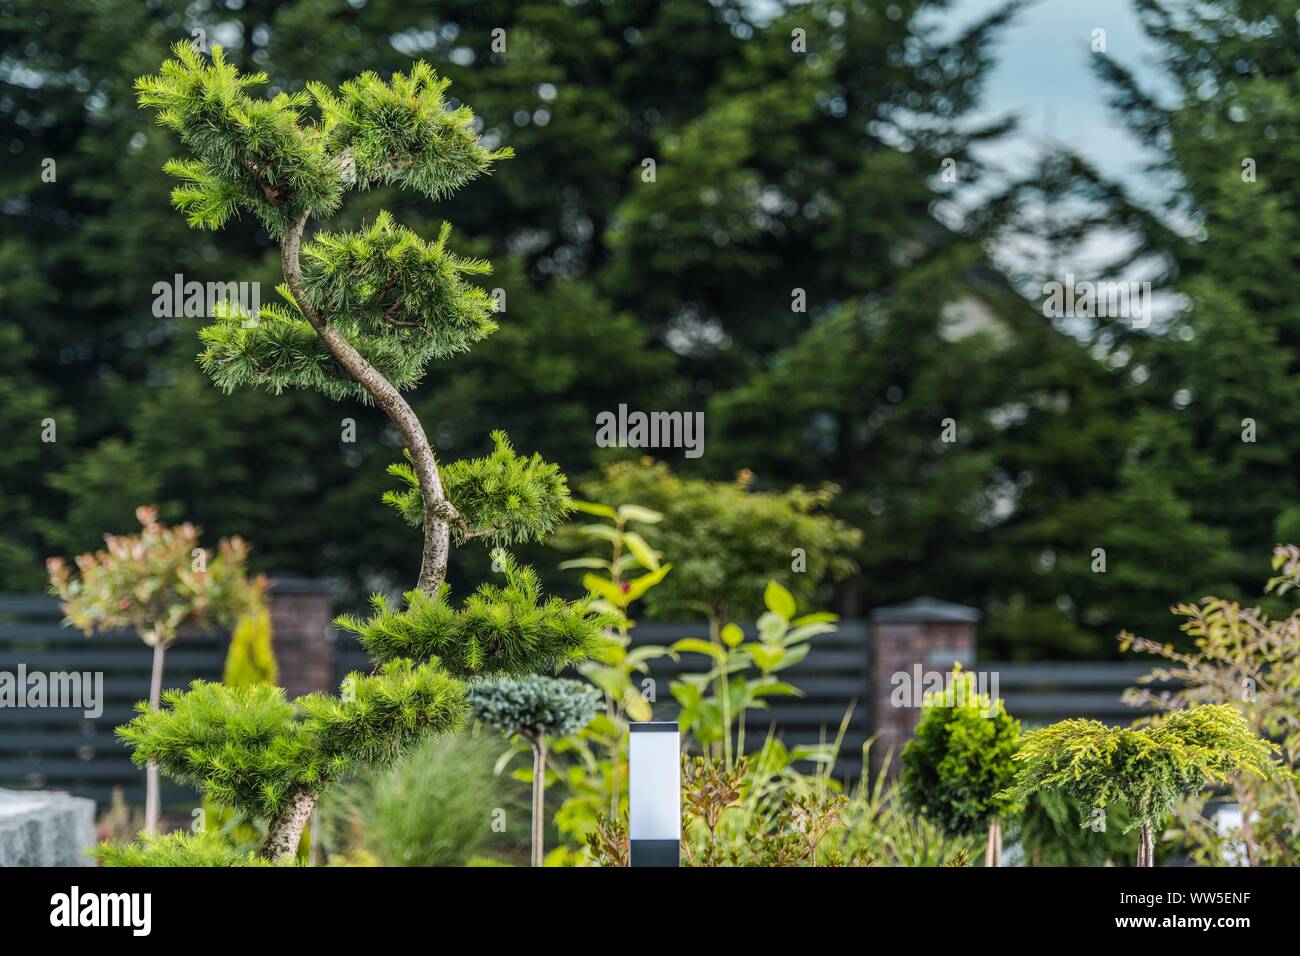 Esotico ed elegante Albero Giardino Closeup Photo. Residenziale giardino cortile specie vegetali. Foto Stock